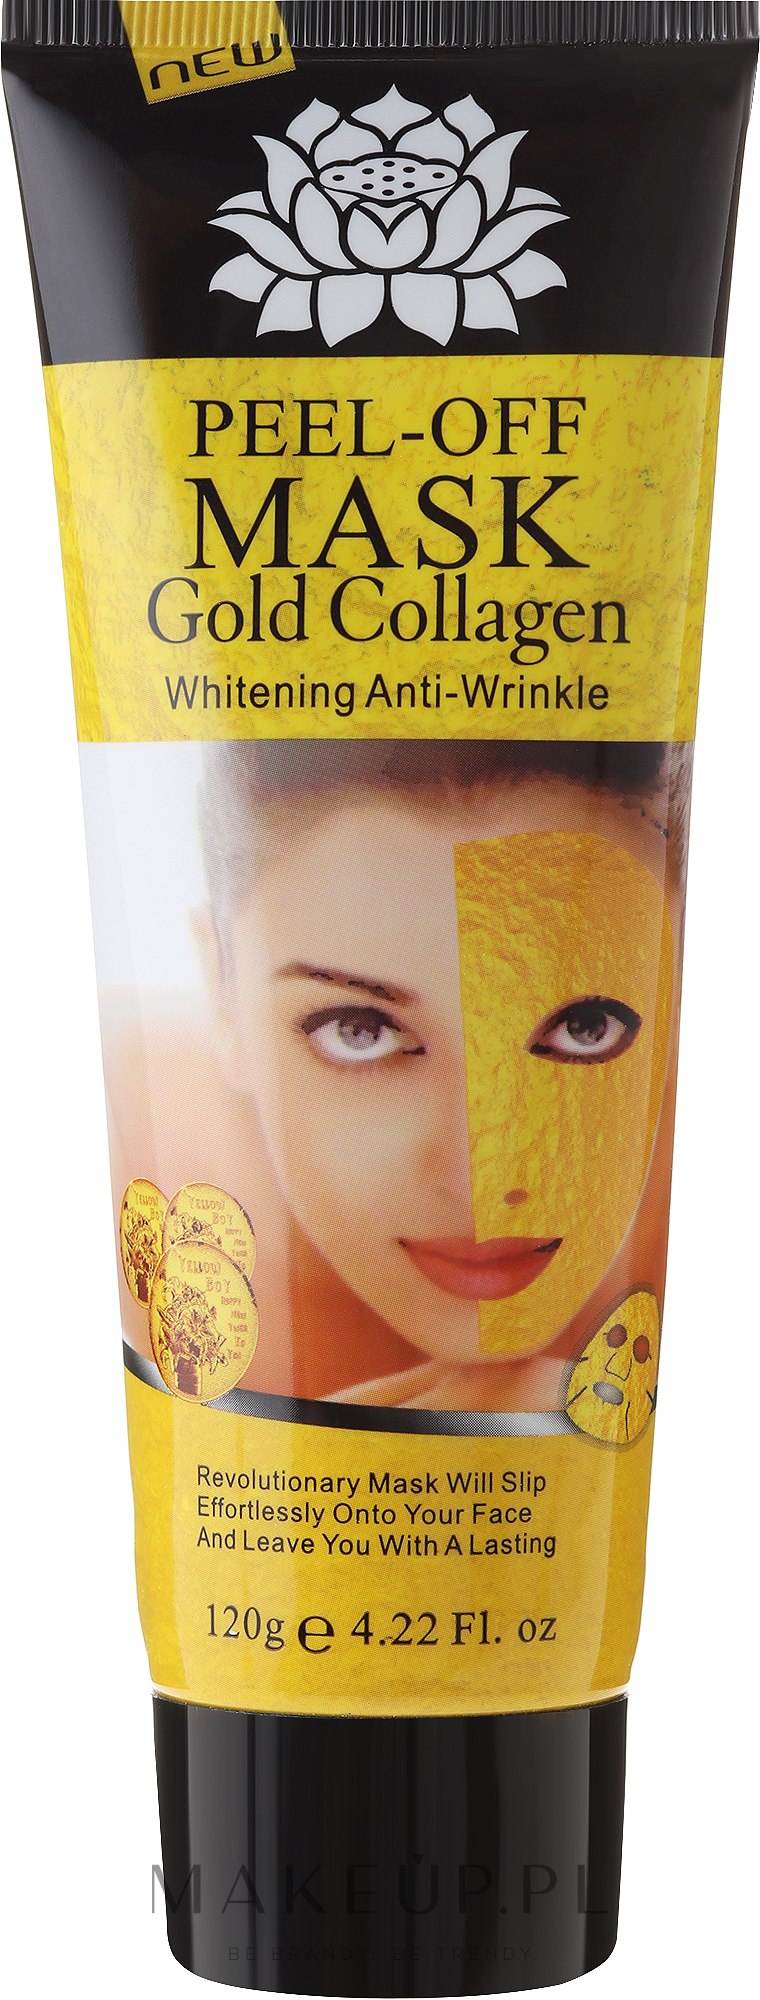 Kolagenowa maska ze złotem peel-off - Pil'aten Peel-Off Mask Gold Collagen Whitening Anti-Wrinkle — Zdjęcie 120 g